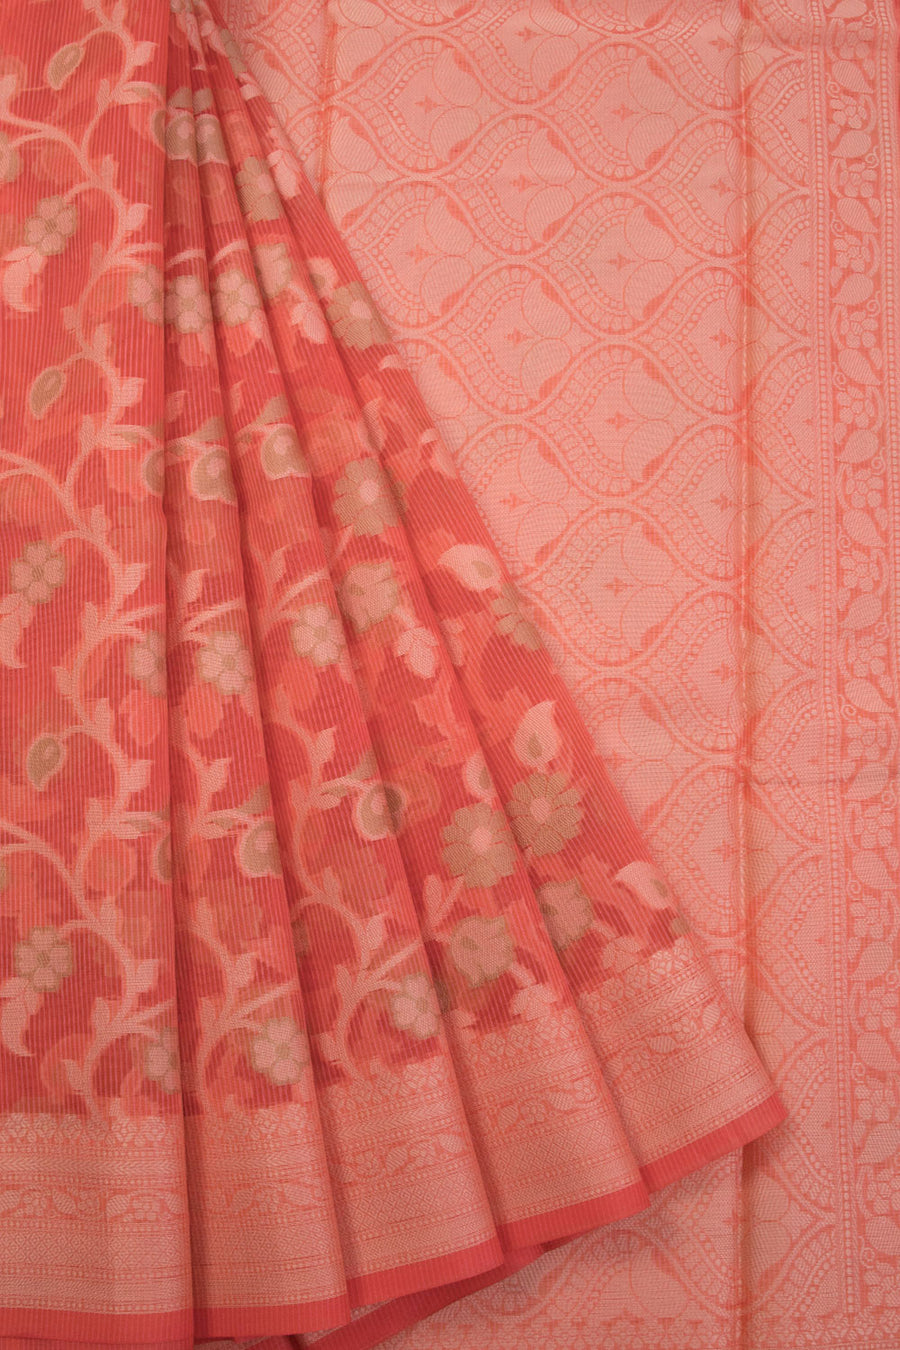 Vermillion Orange Handloom Banarasi Silk Cotton Saree 10070497